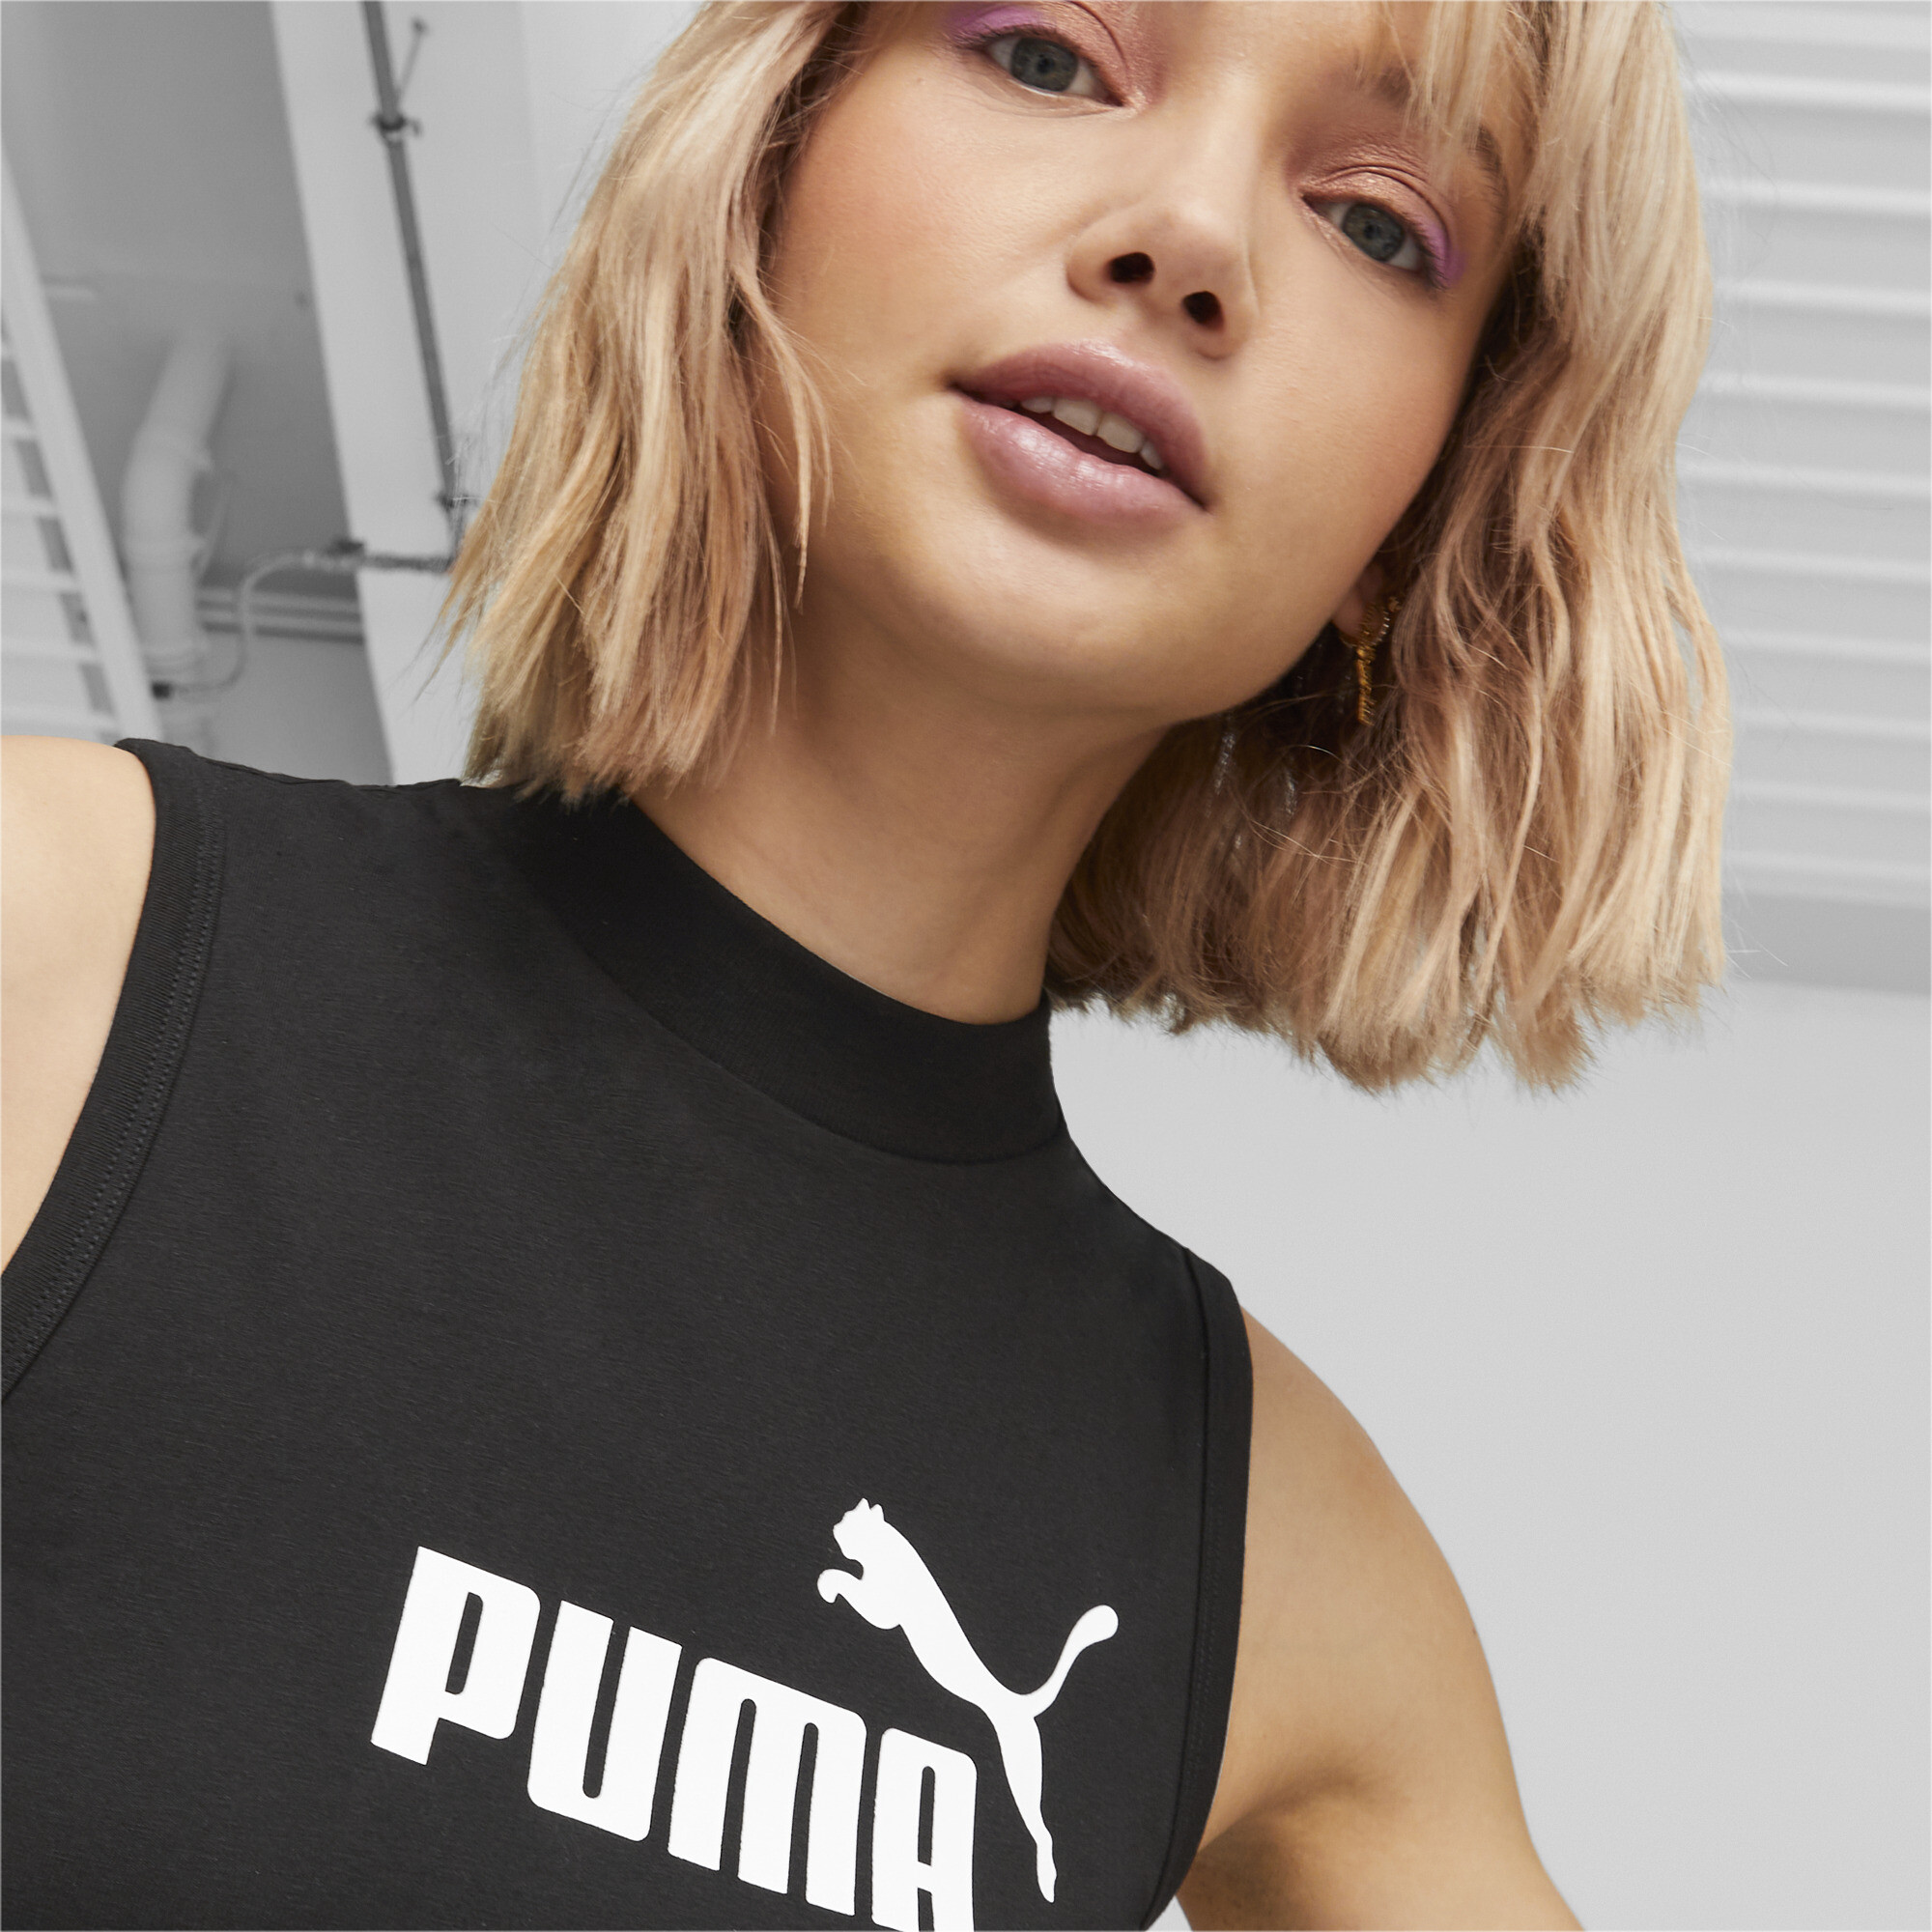 Women's Puma Essentials Slim Logo Tank Top, Black, Size 3XL, Clothing